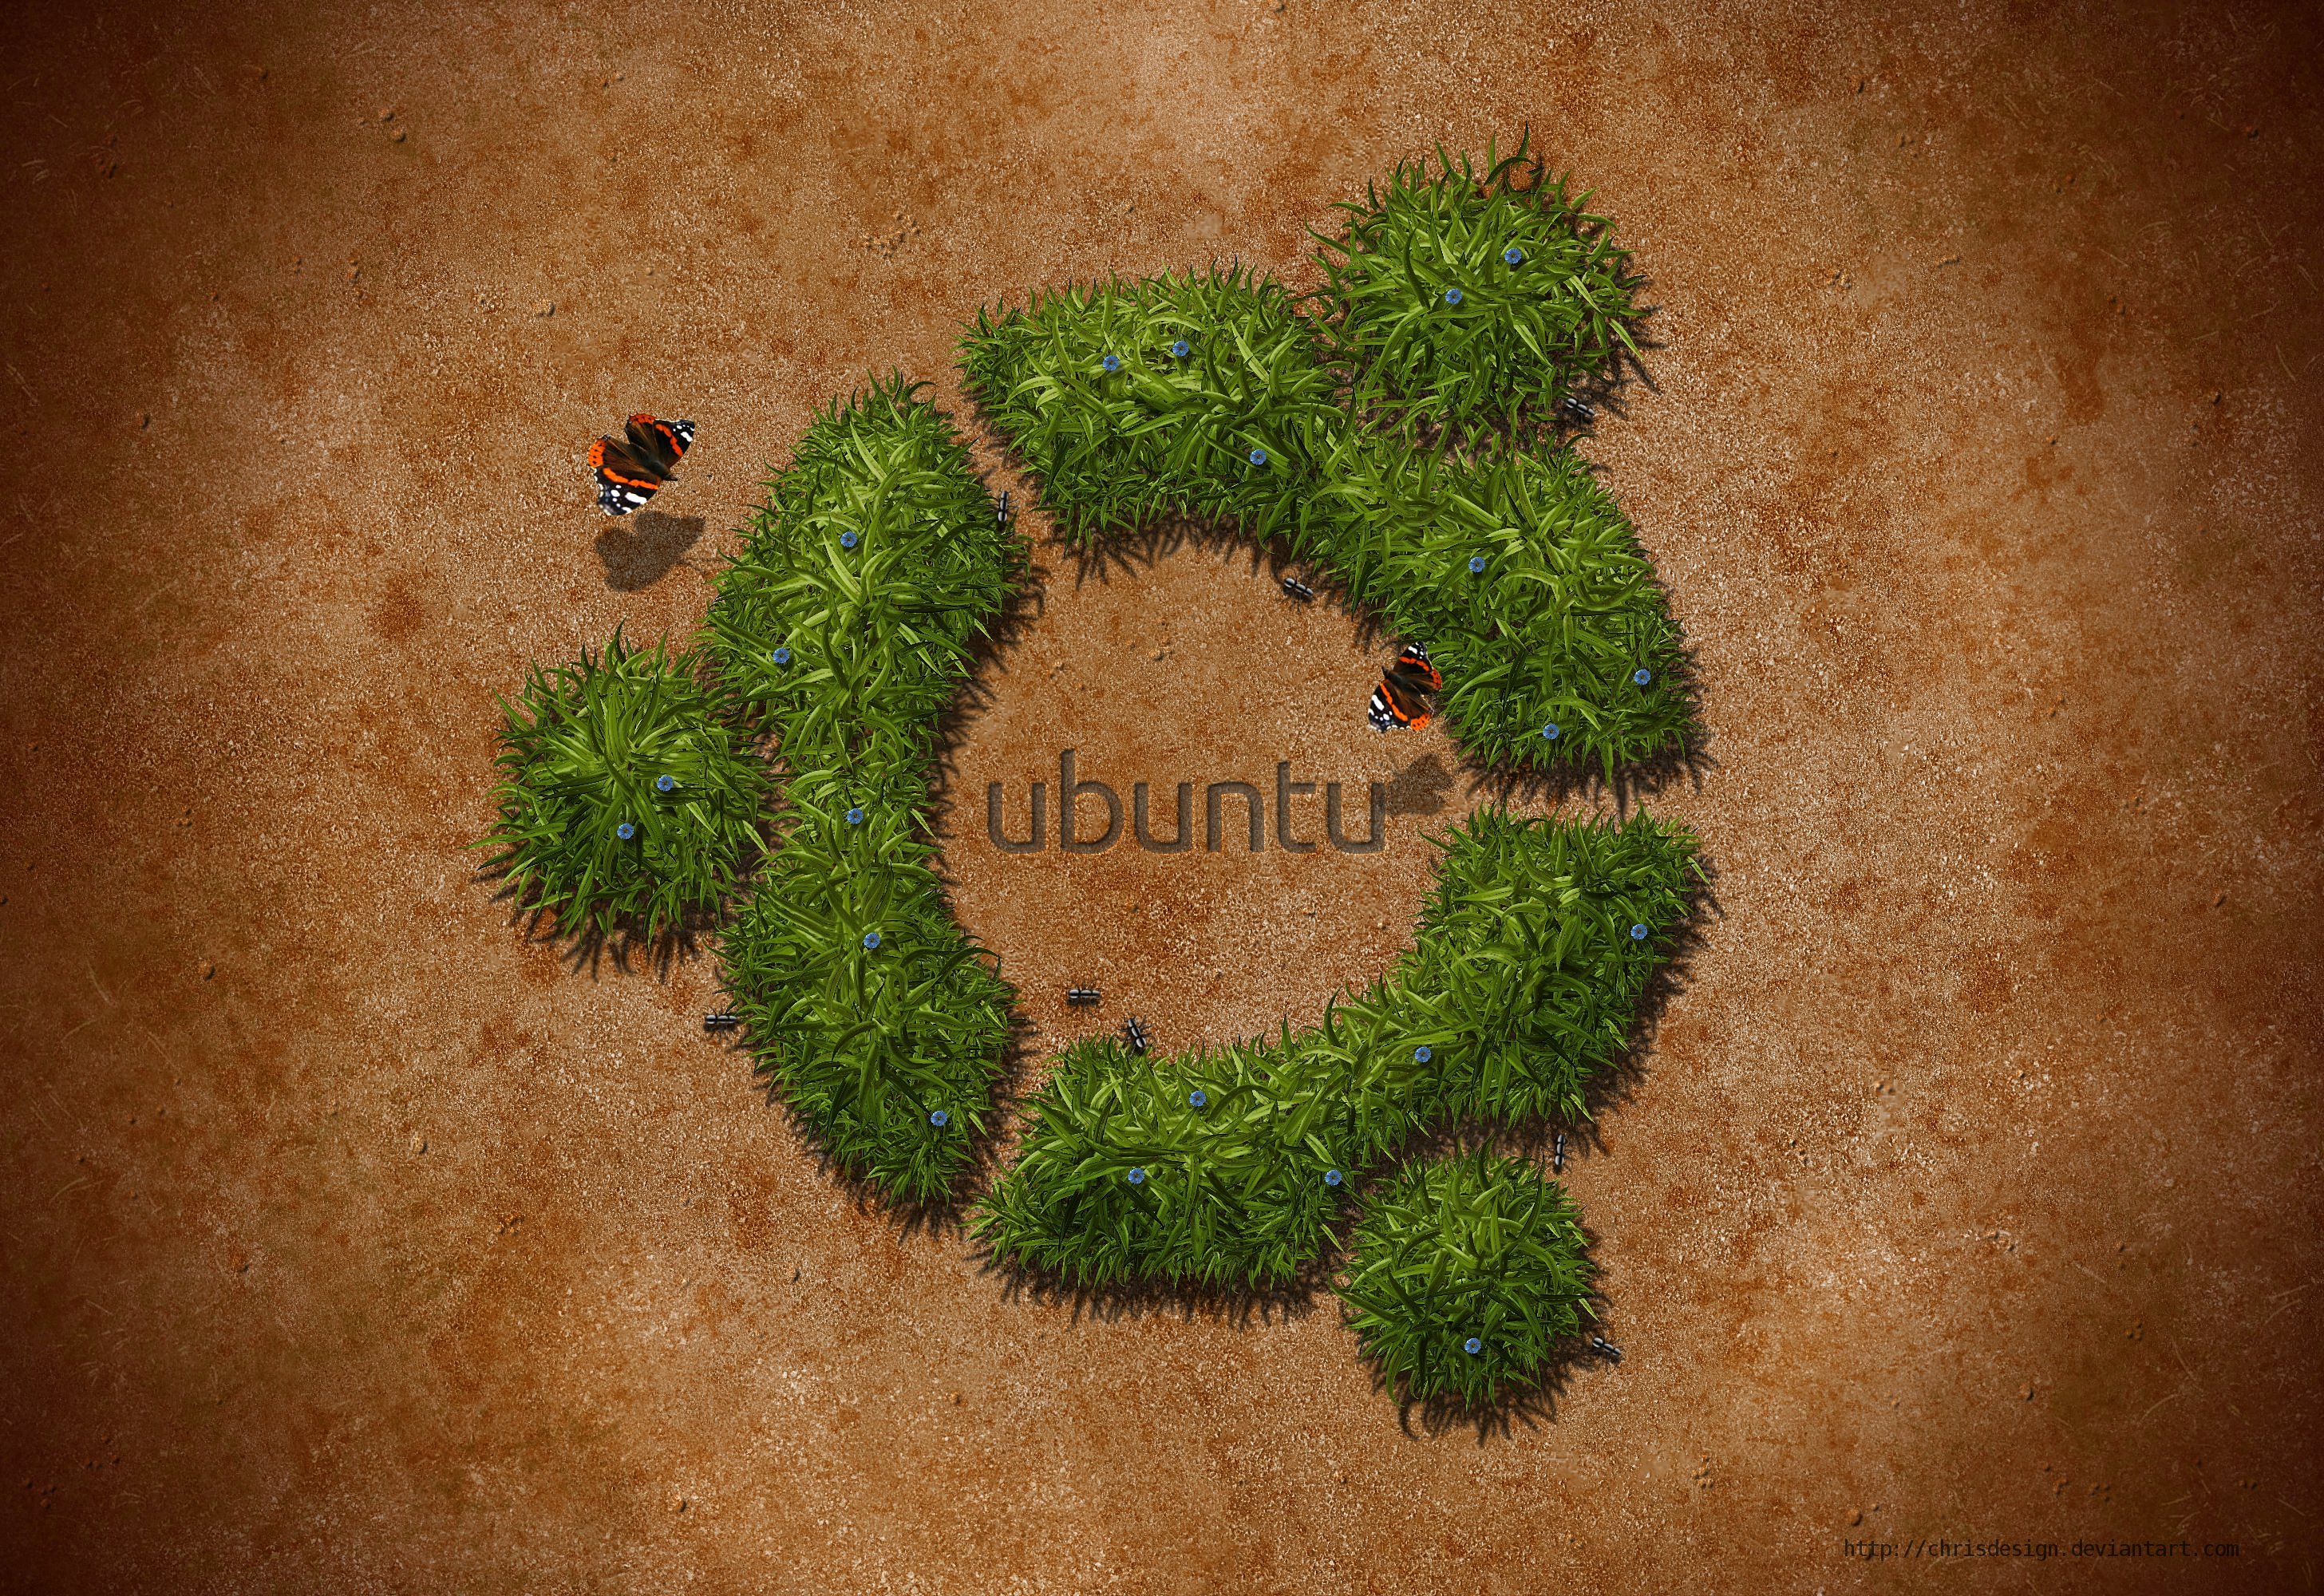 Download mobile wallpaper Ubuntu, Technology for free.